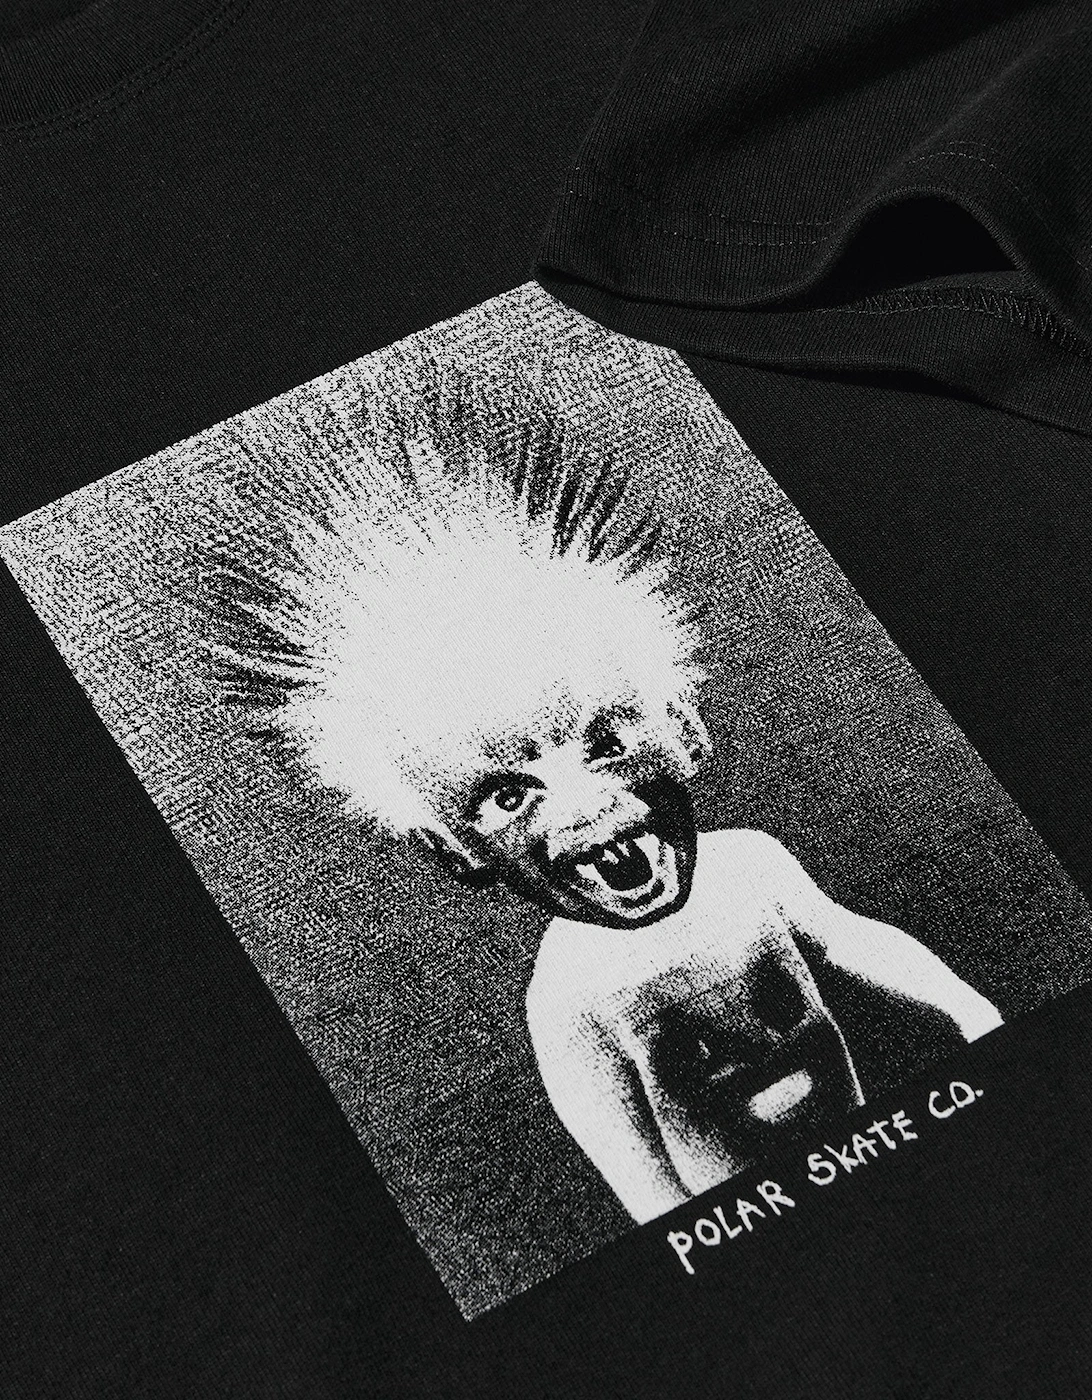 Demon Child T-Shirt - Black